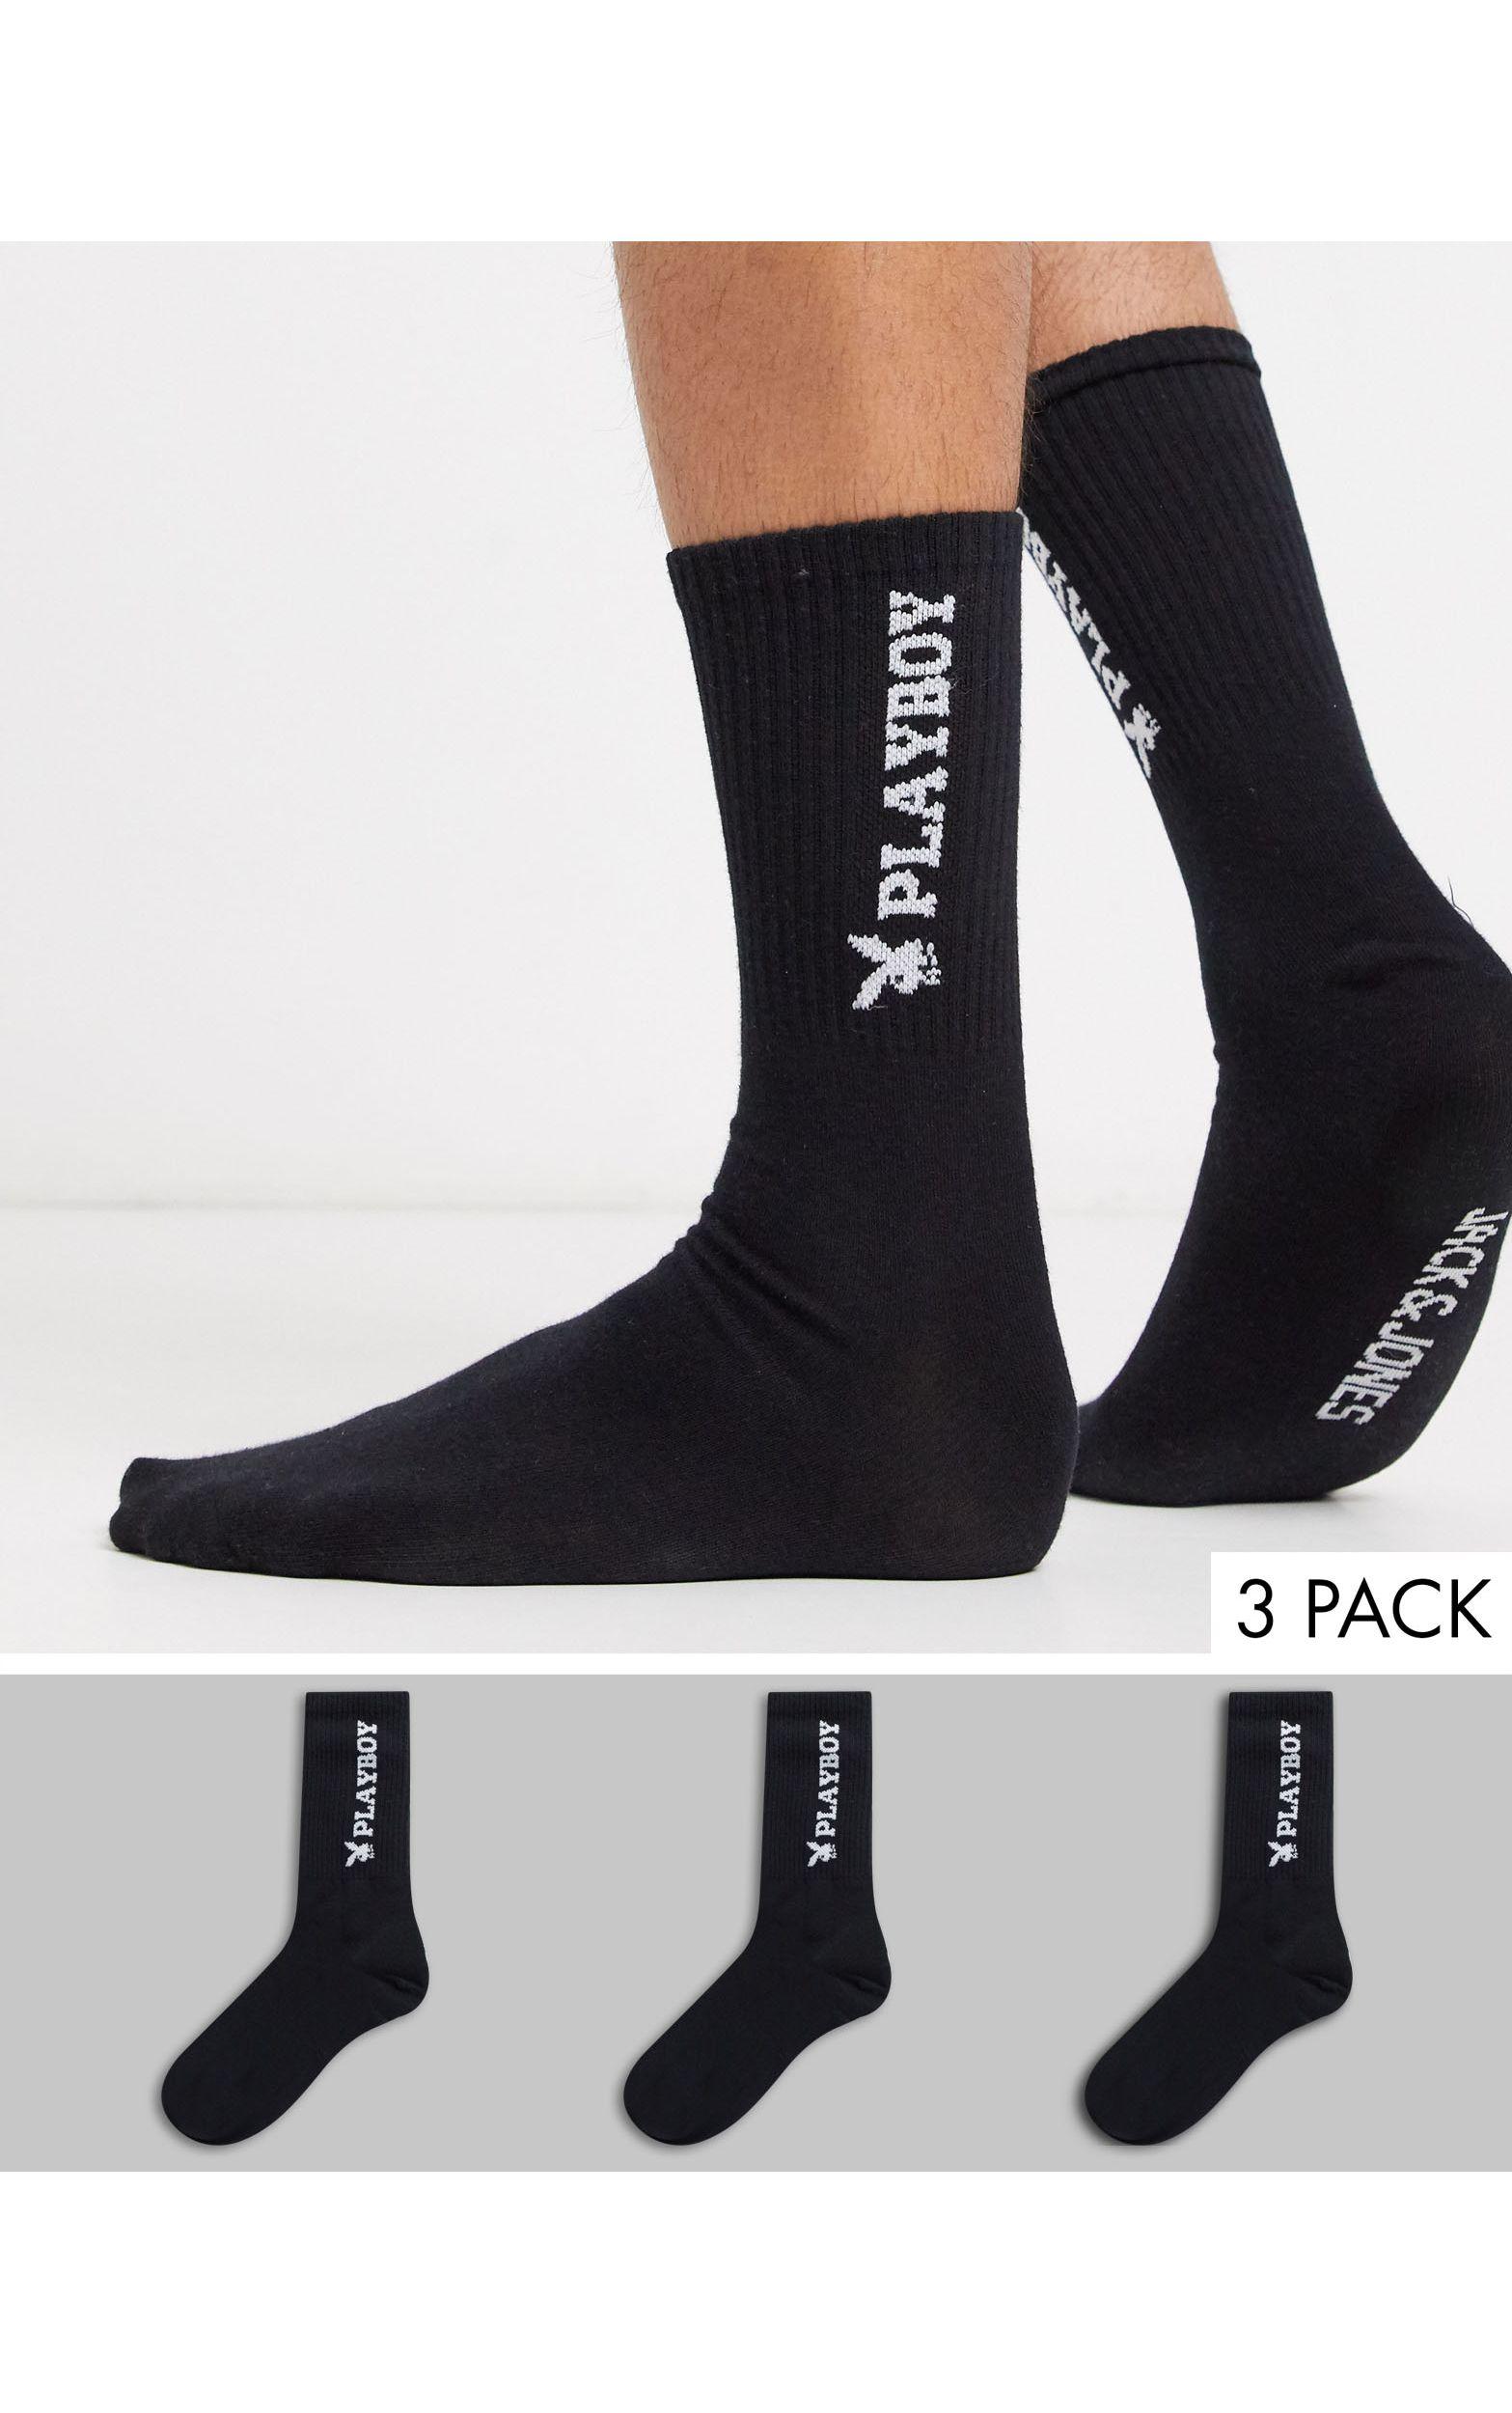 Jack & Jones Cotton Playboy Socks in Black for Men - Lyst